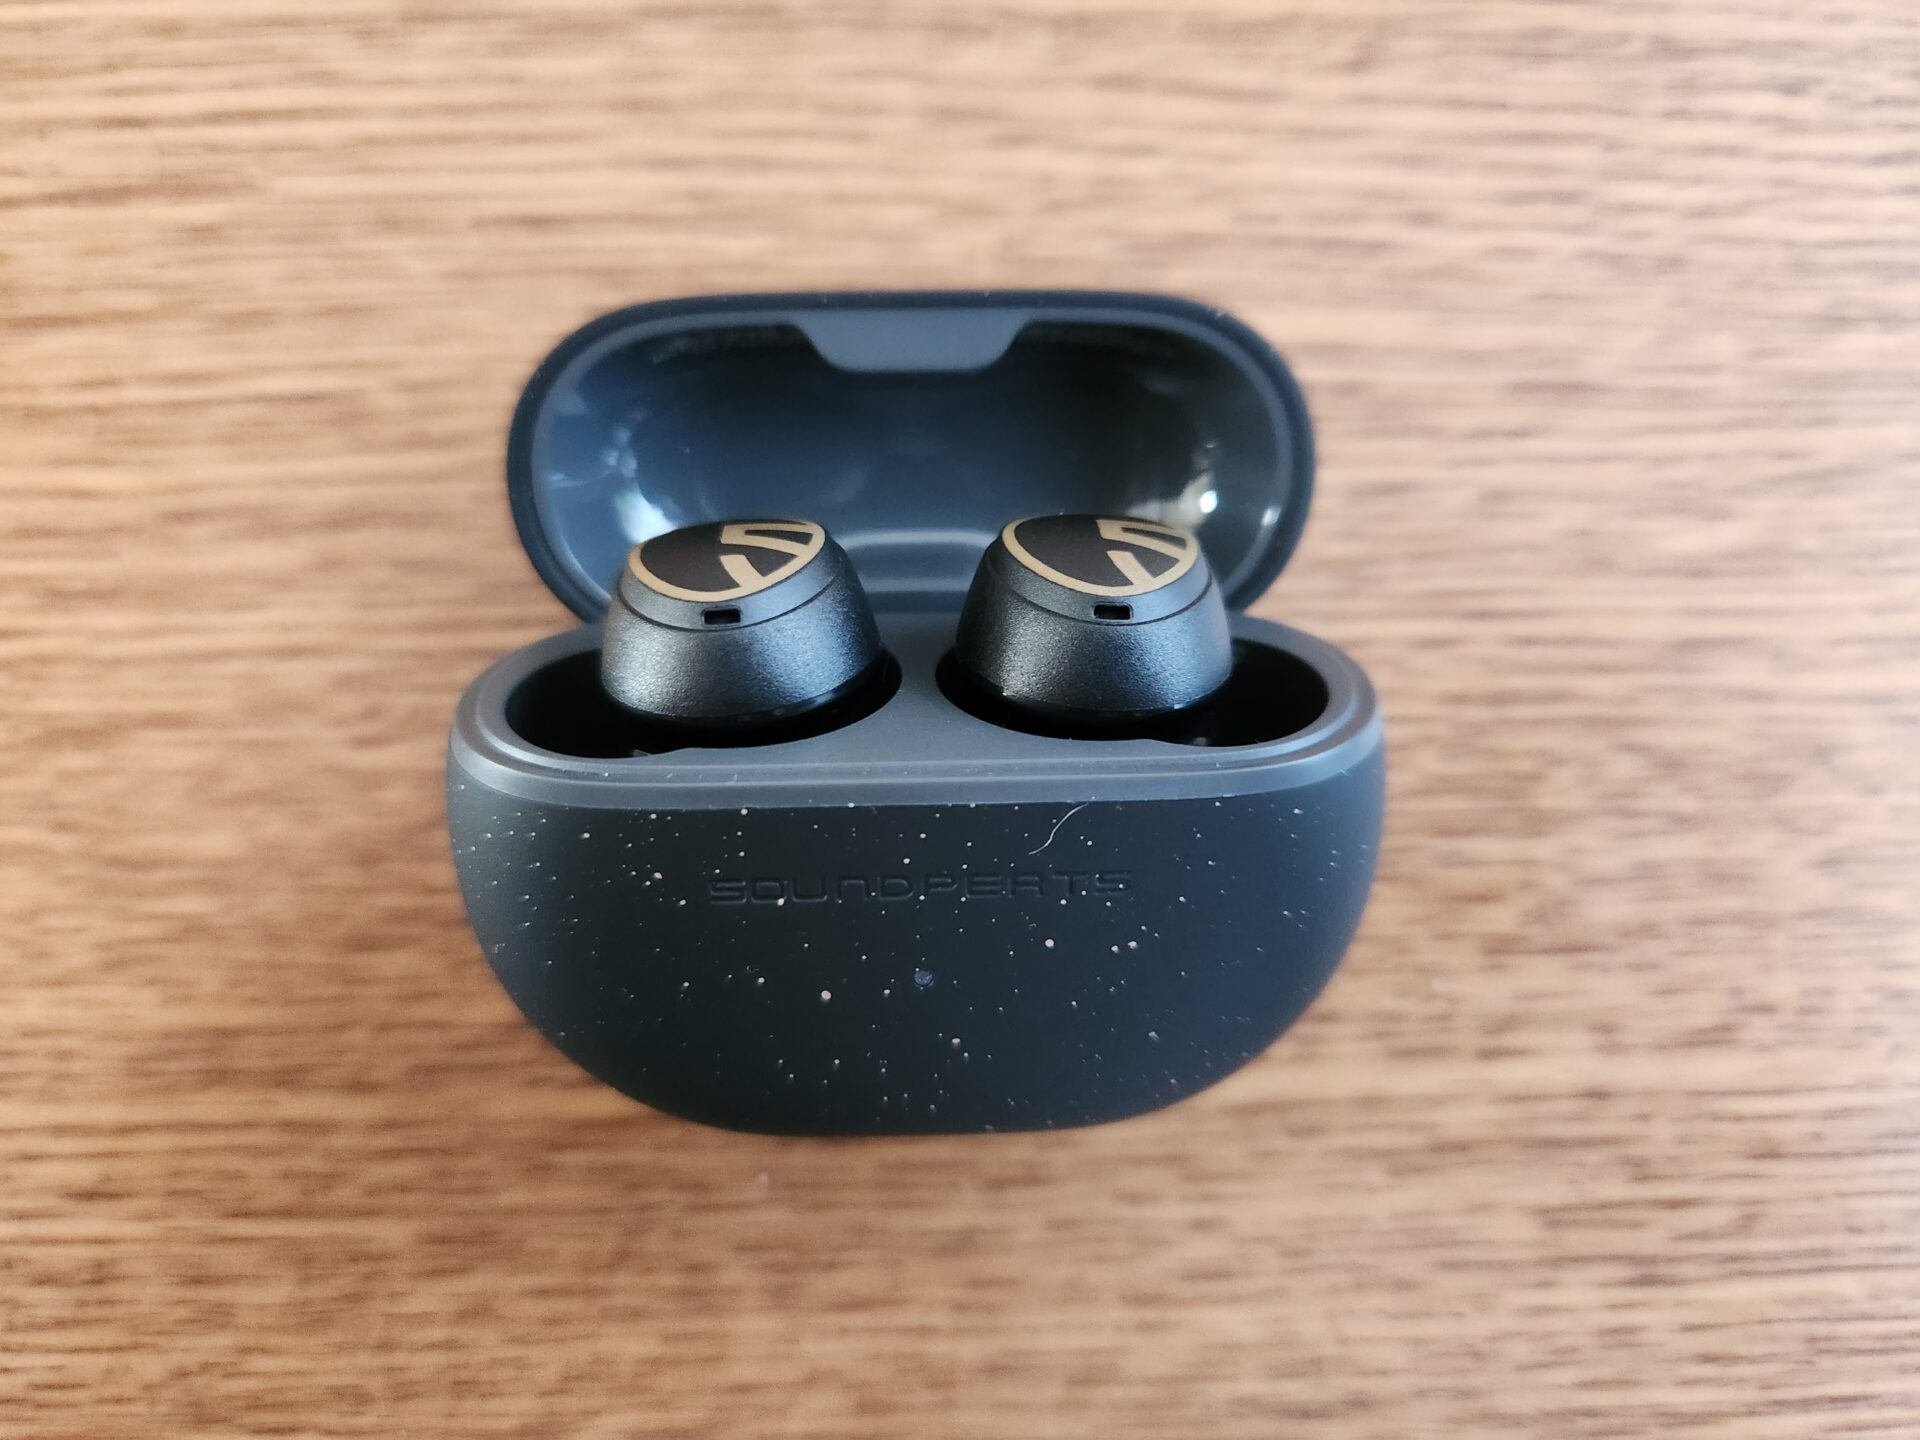 soundpeats-mini-pro-hs-charging-case-opened